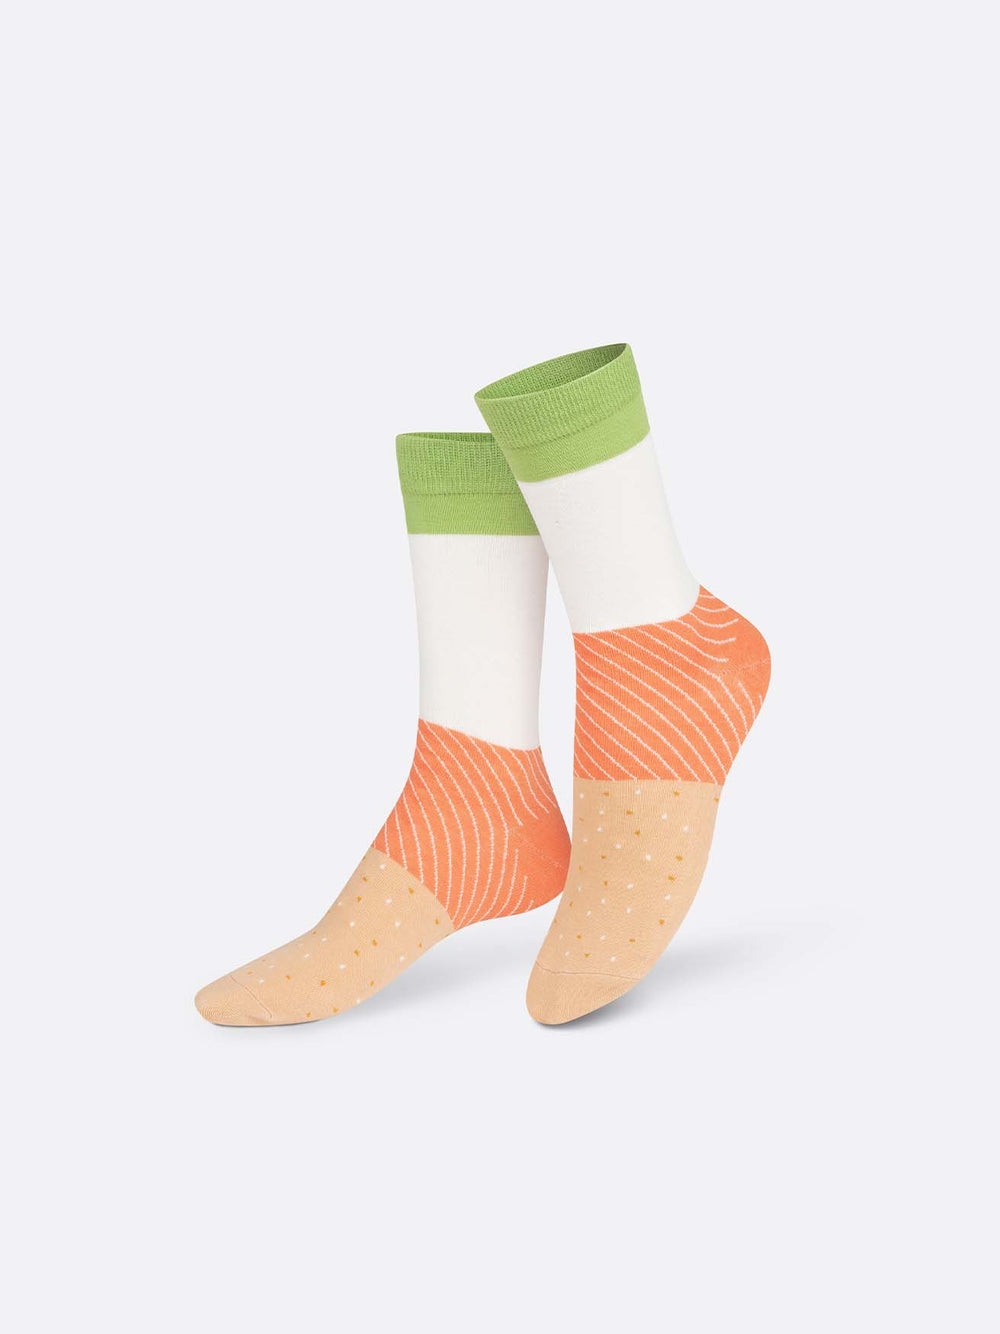 Salmon Bagel Socks - #Perch#